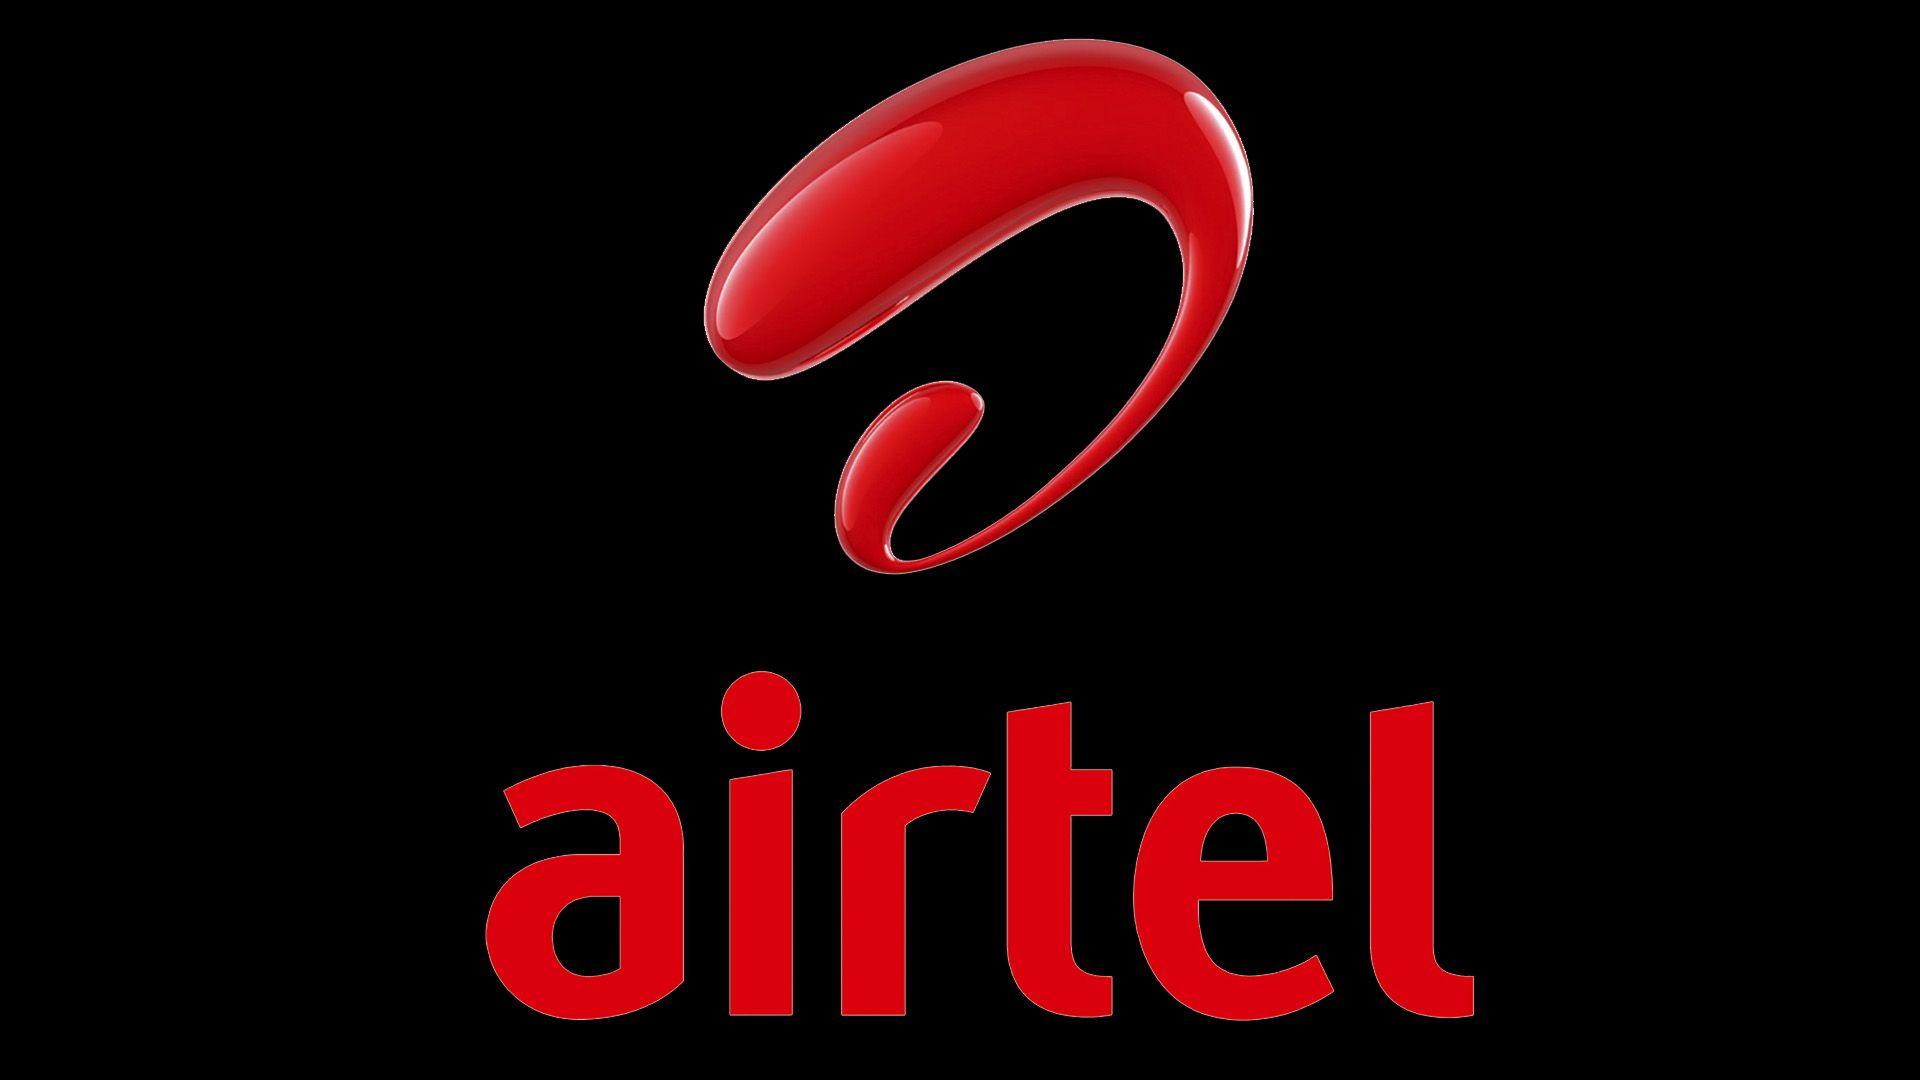 Artil Logo - Airtel Logo, Airtel Symbol, Meaning, History and Evolution